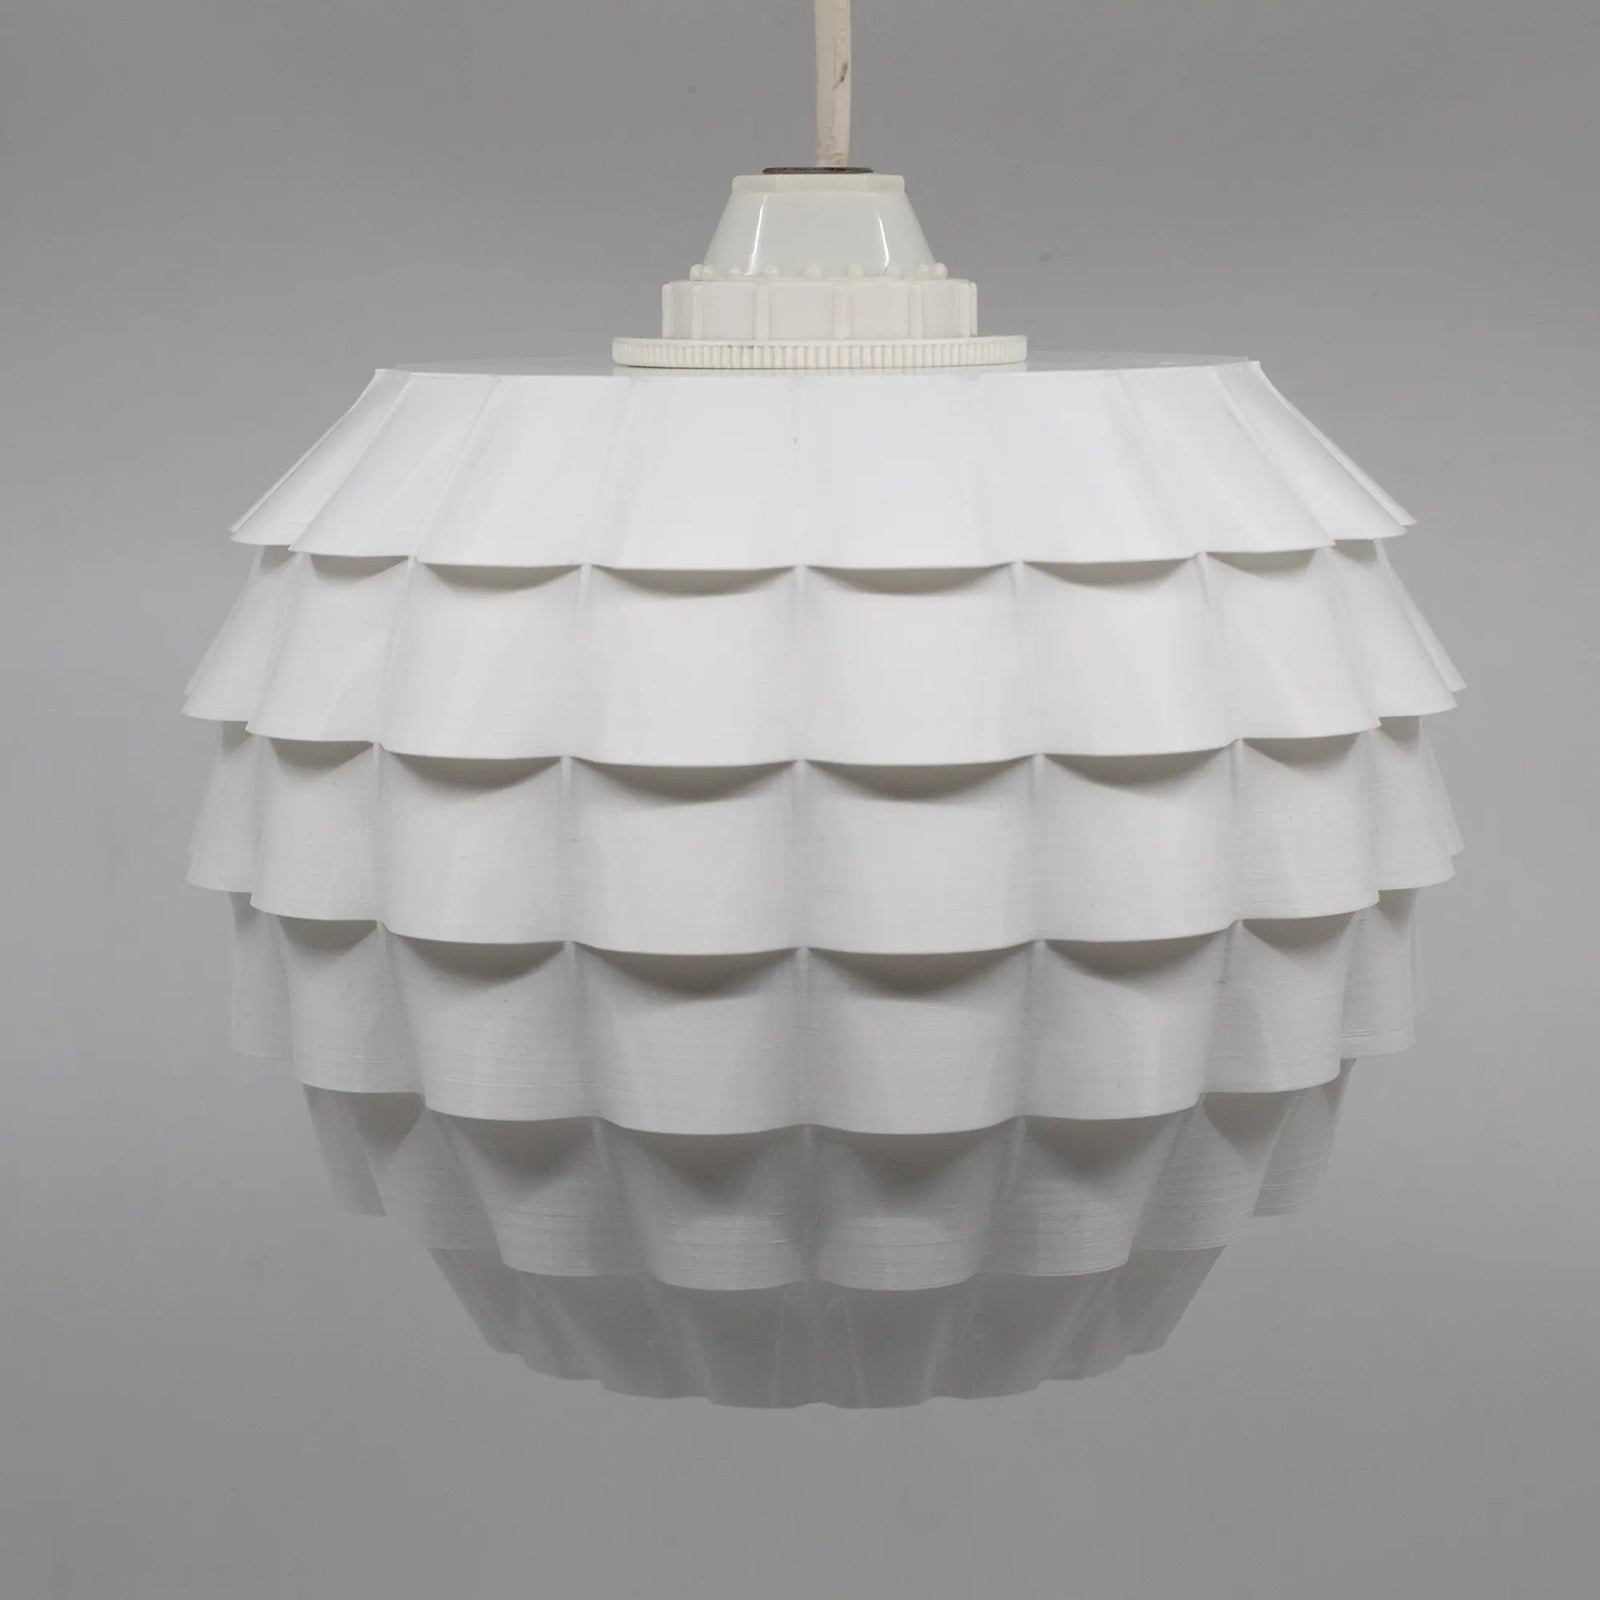 Aginara - Diseño de pantalla de lámpara abstracta